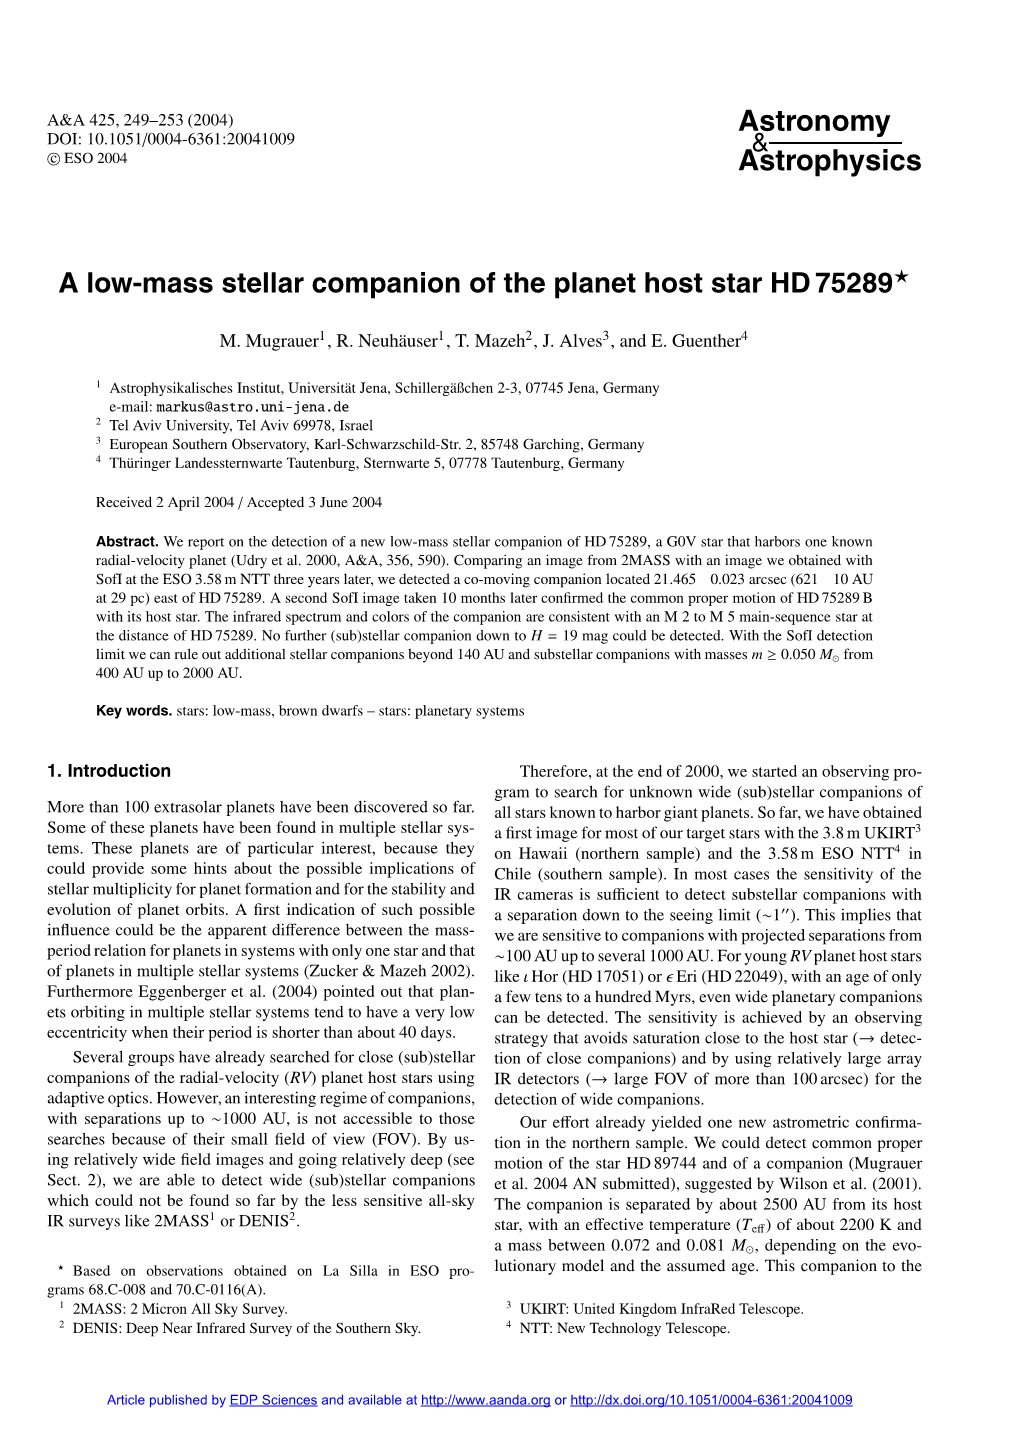 A Low-Mass Stellar Companion of the Planet Host Star HD 75289